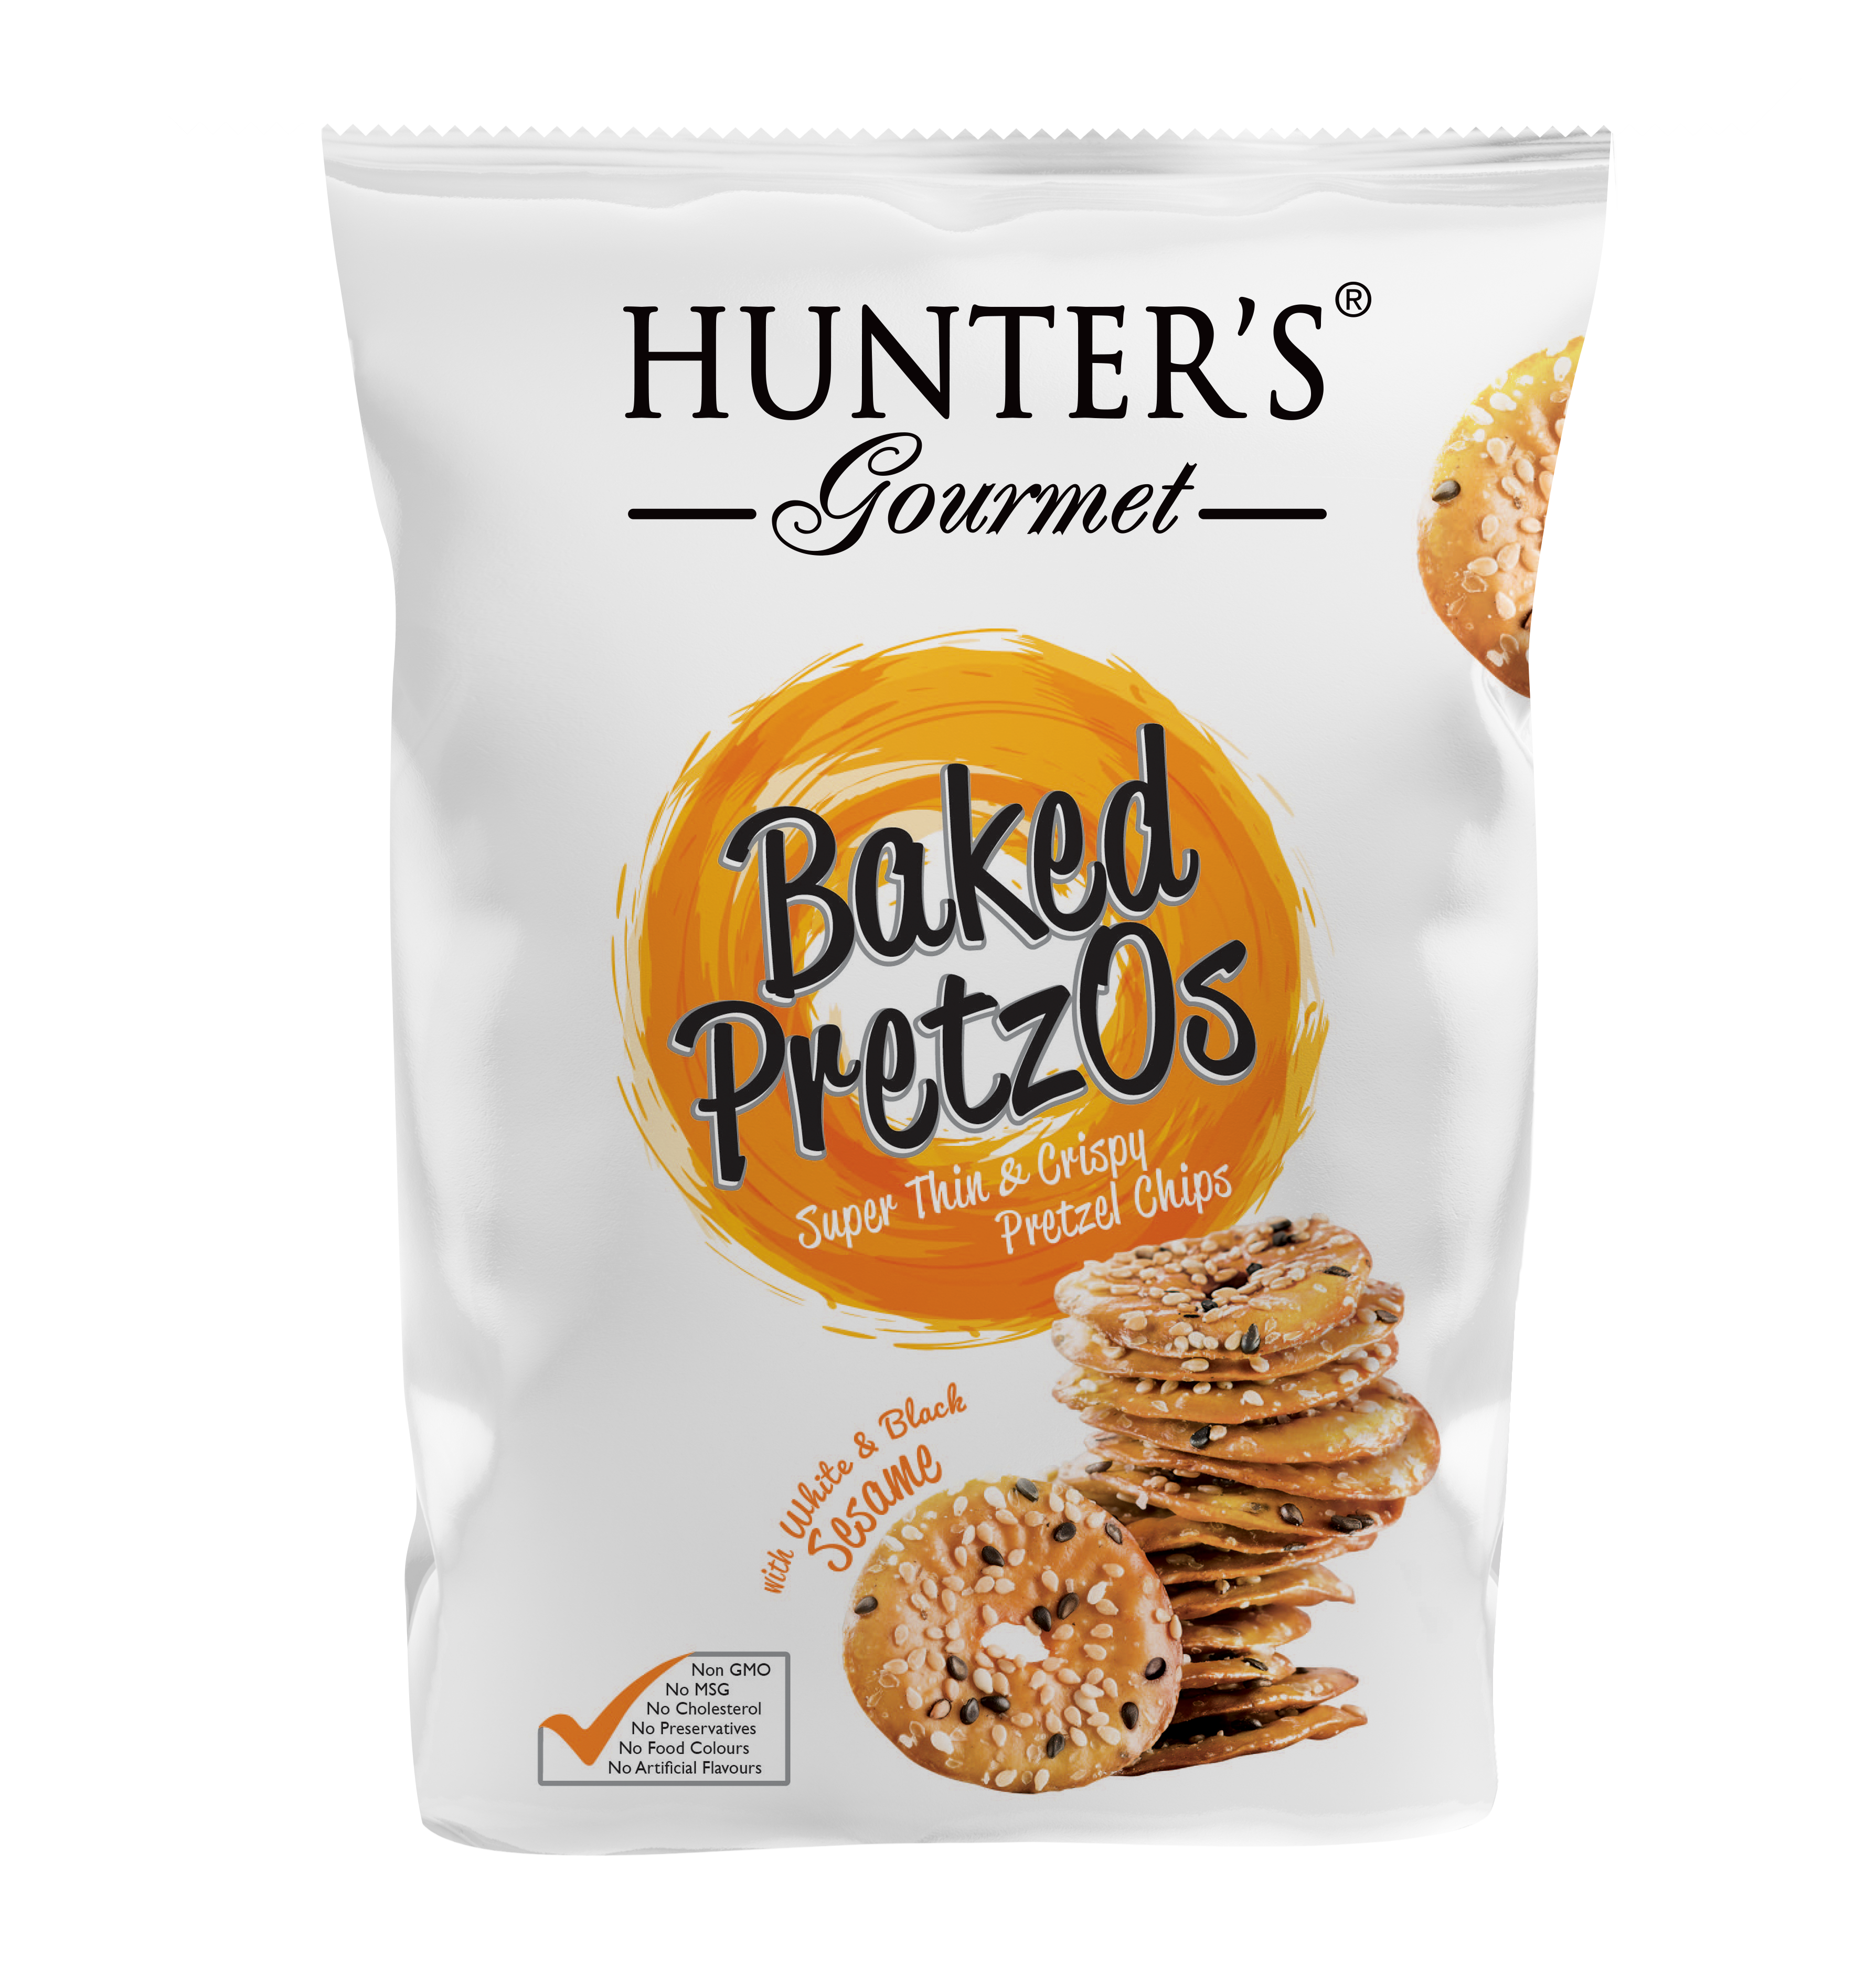 Hunter's Gourmet Baked Pretzos - with White & Black Sesame 20 units per case 80 g